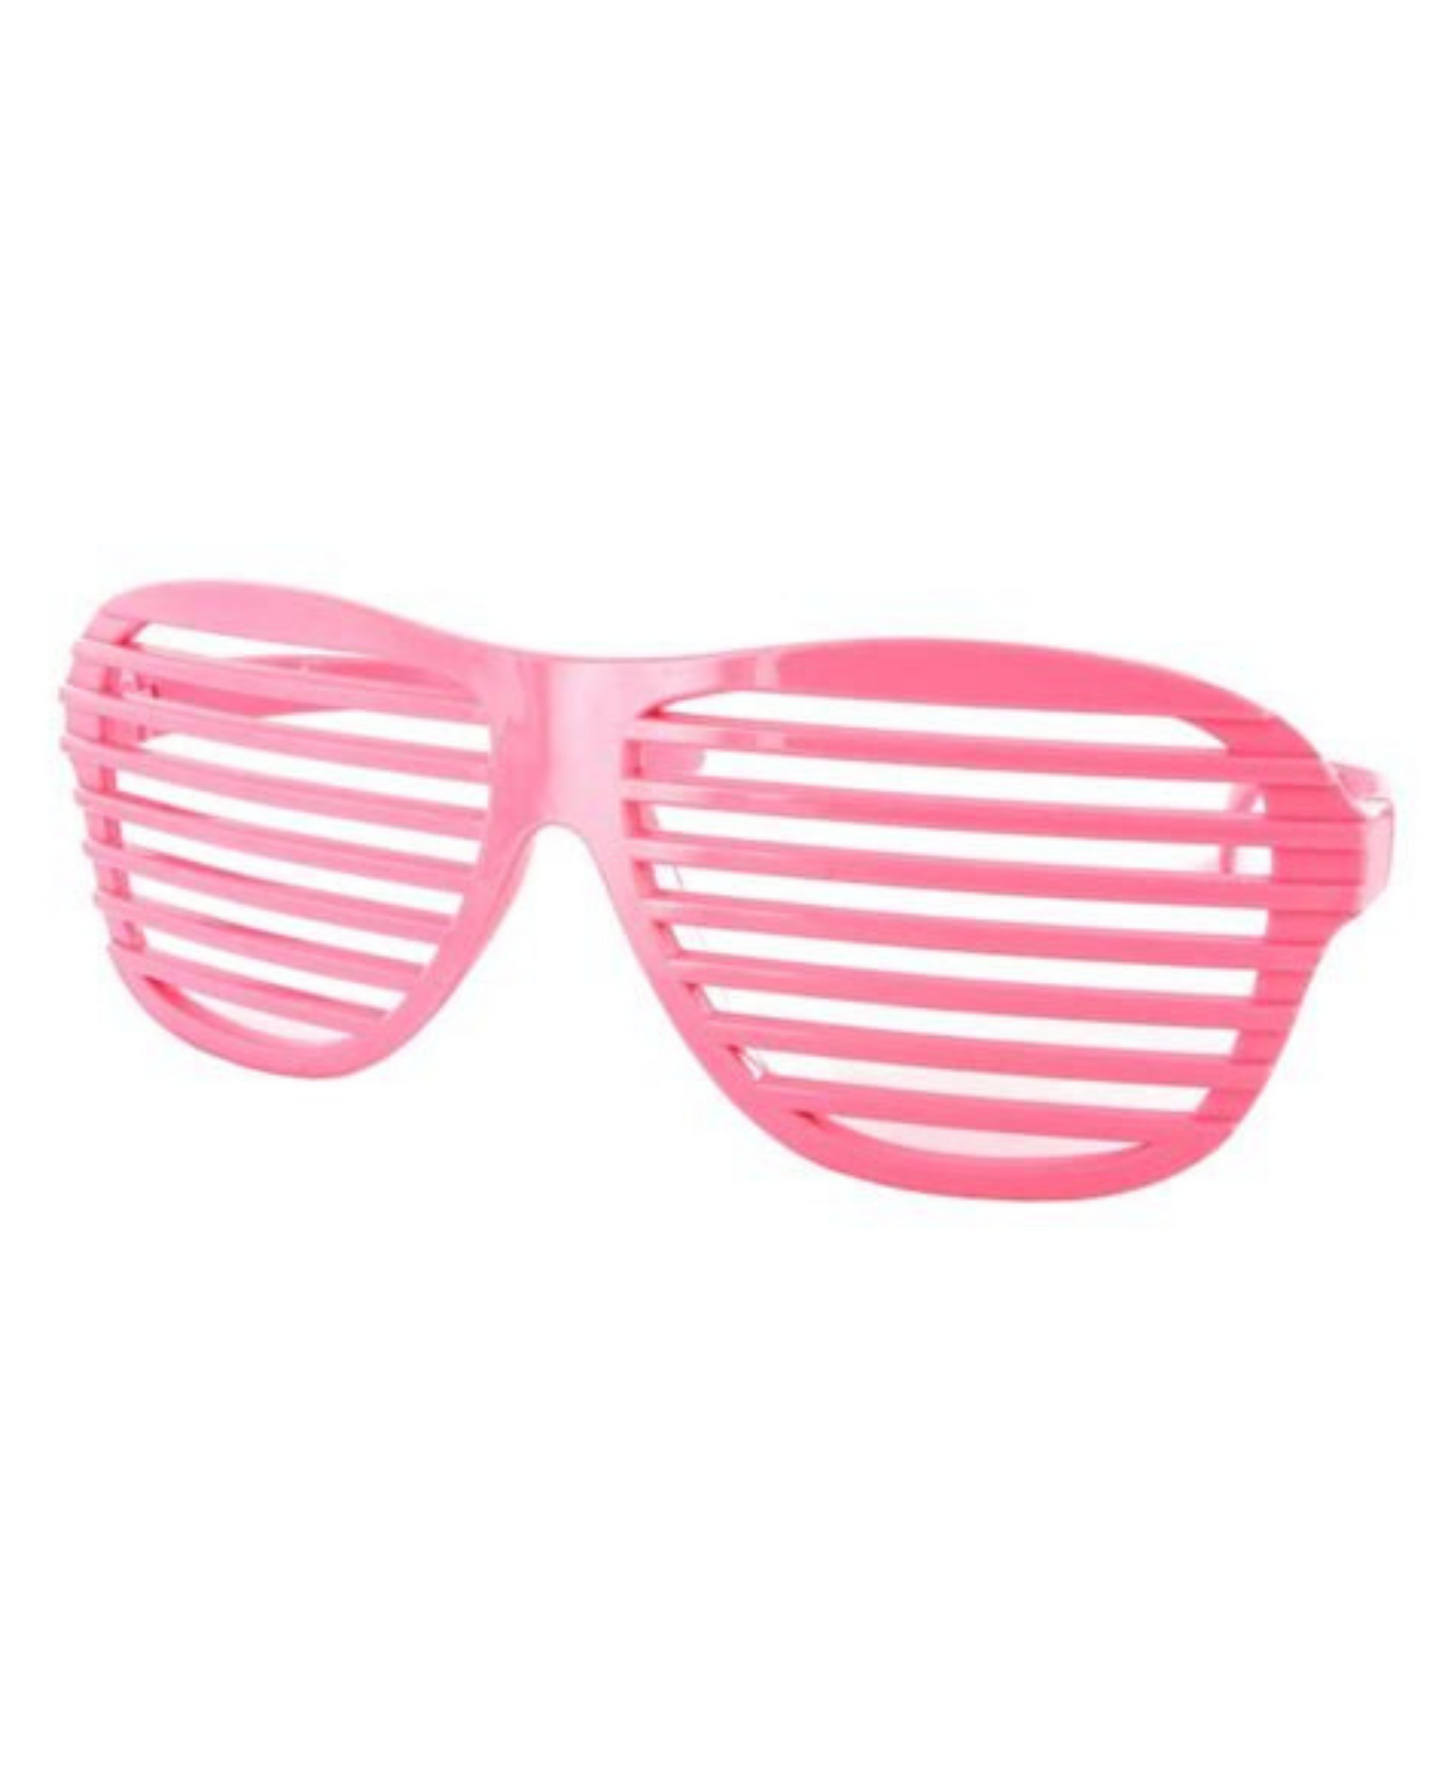 Pink Slot Glasses